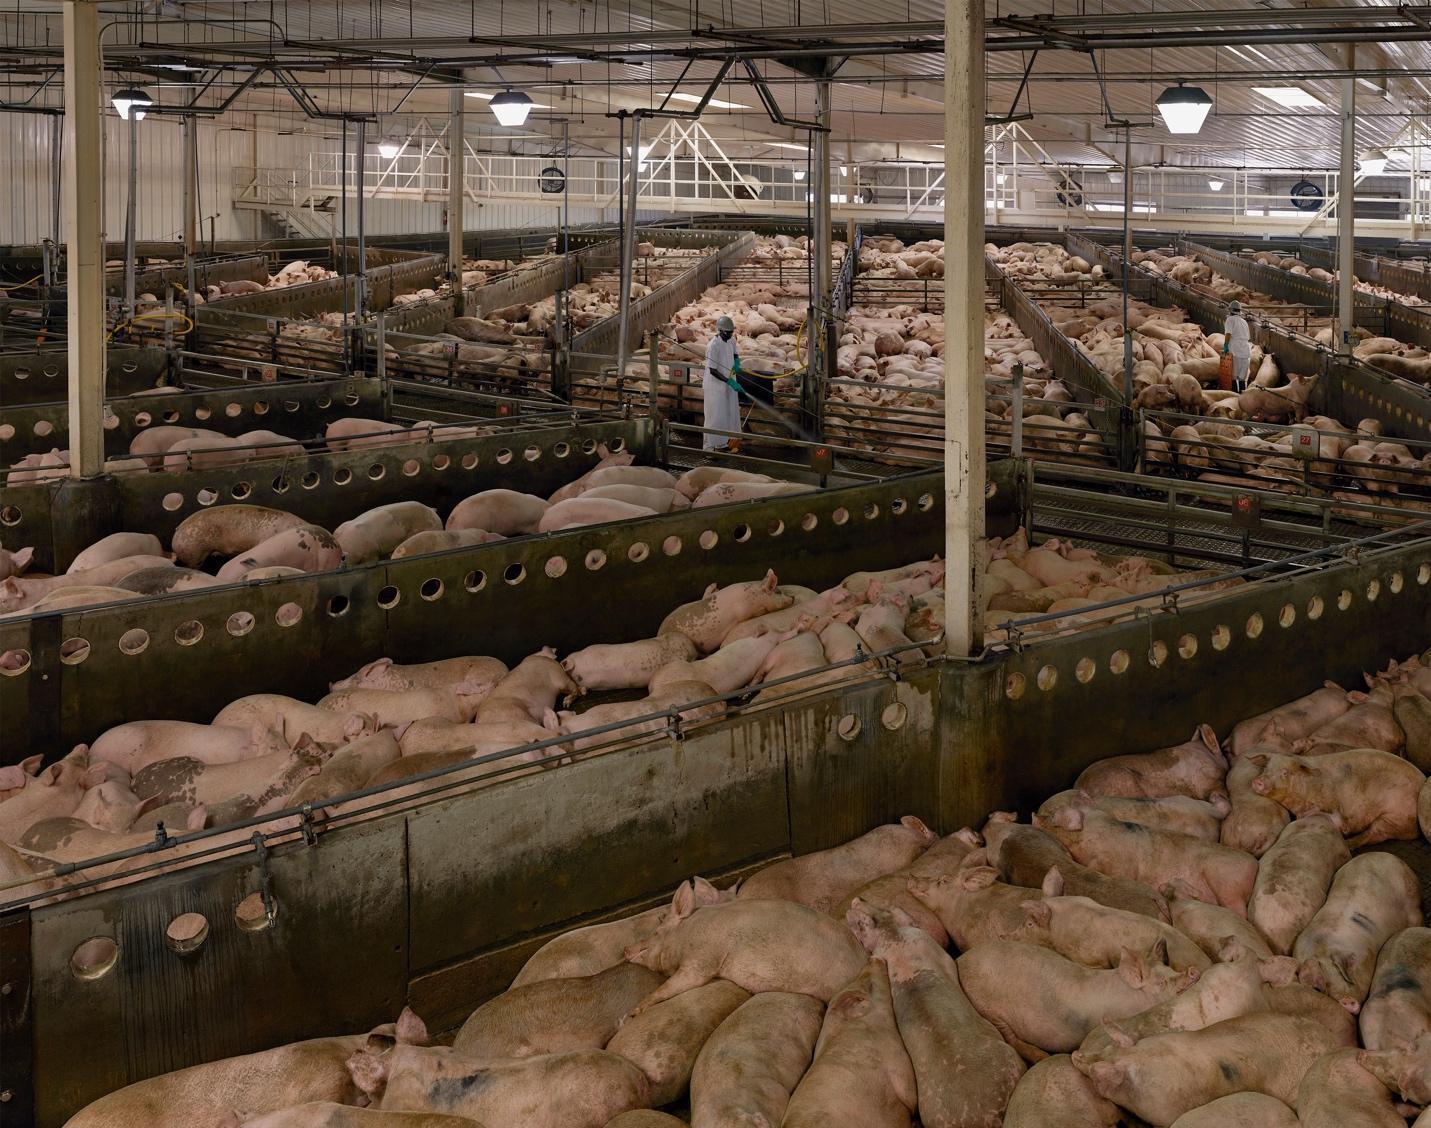 photograph of a pig factory farm floor